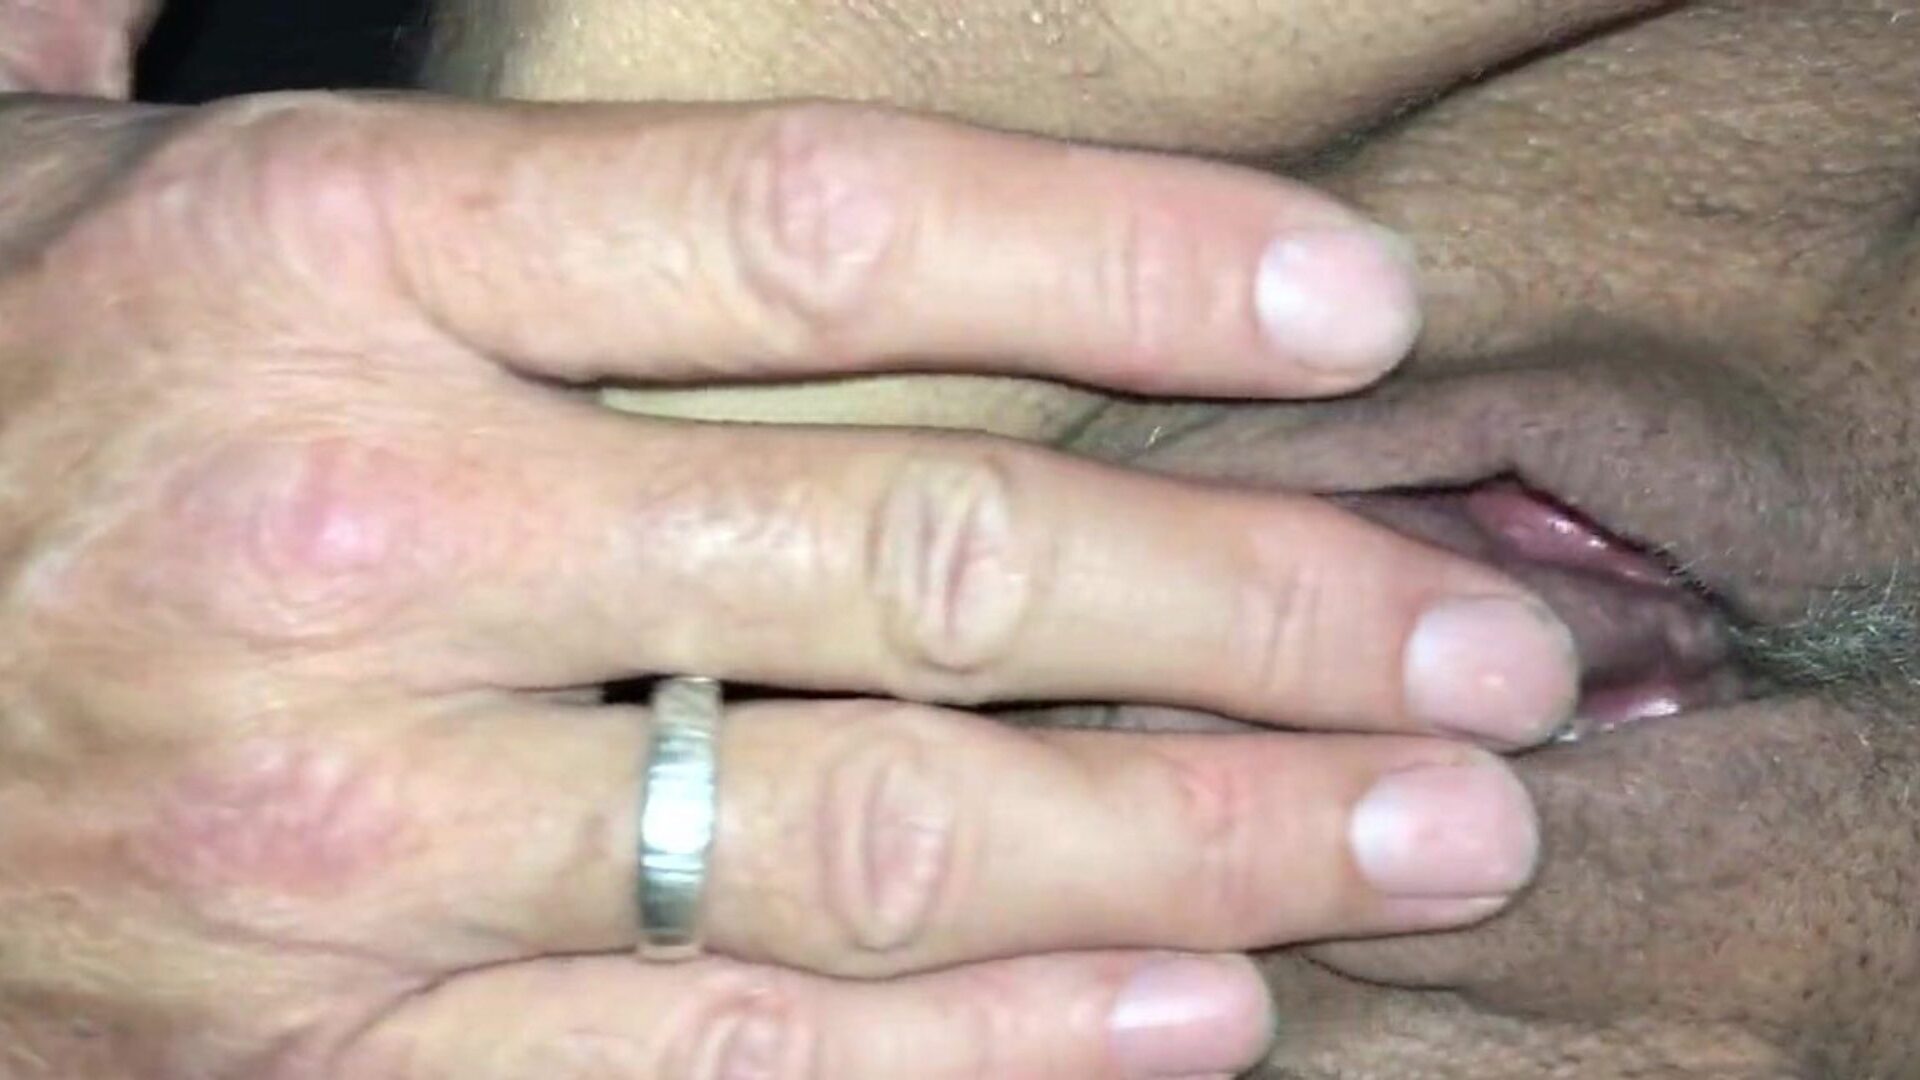 pov gaping pussy massage and fingerfuck orgasm: hd porn 86 watch pov gaping pussy massage and fingerfuck orgasm episode on xhamster - η απόλυτη συλλογή δωρεάν μασάζ οργασμού και μασάζ επεισόδια hd porn tube